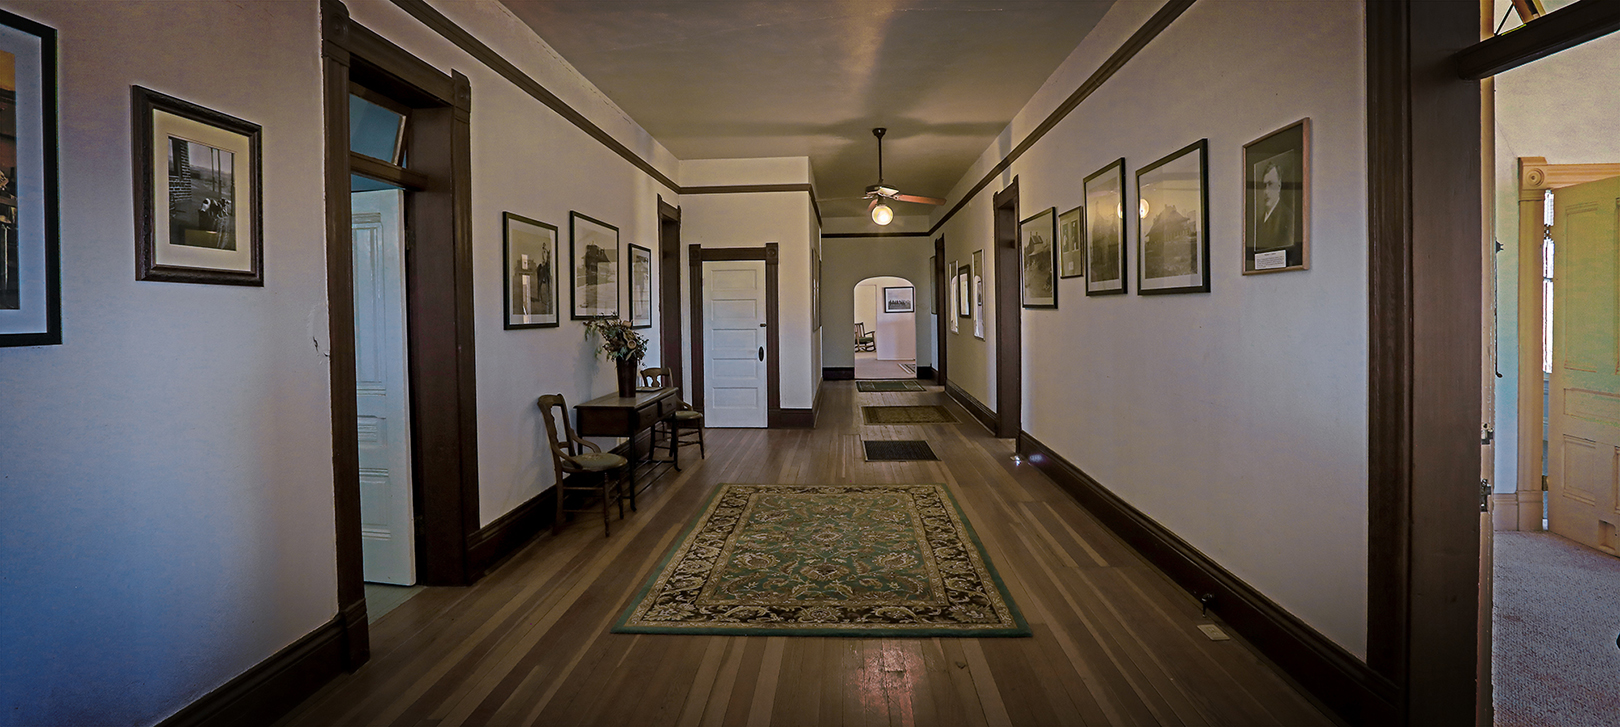 An interior shot of the San Rafael Ranch house